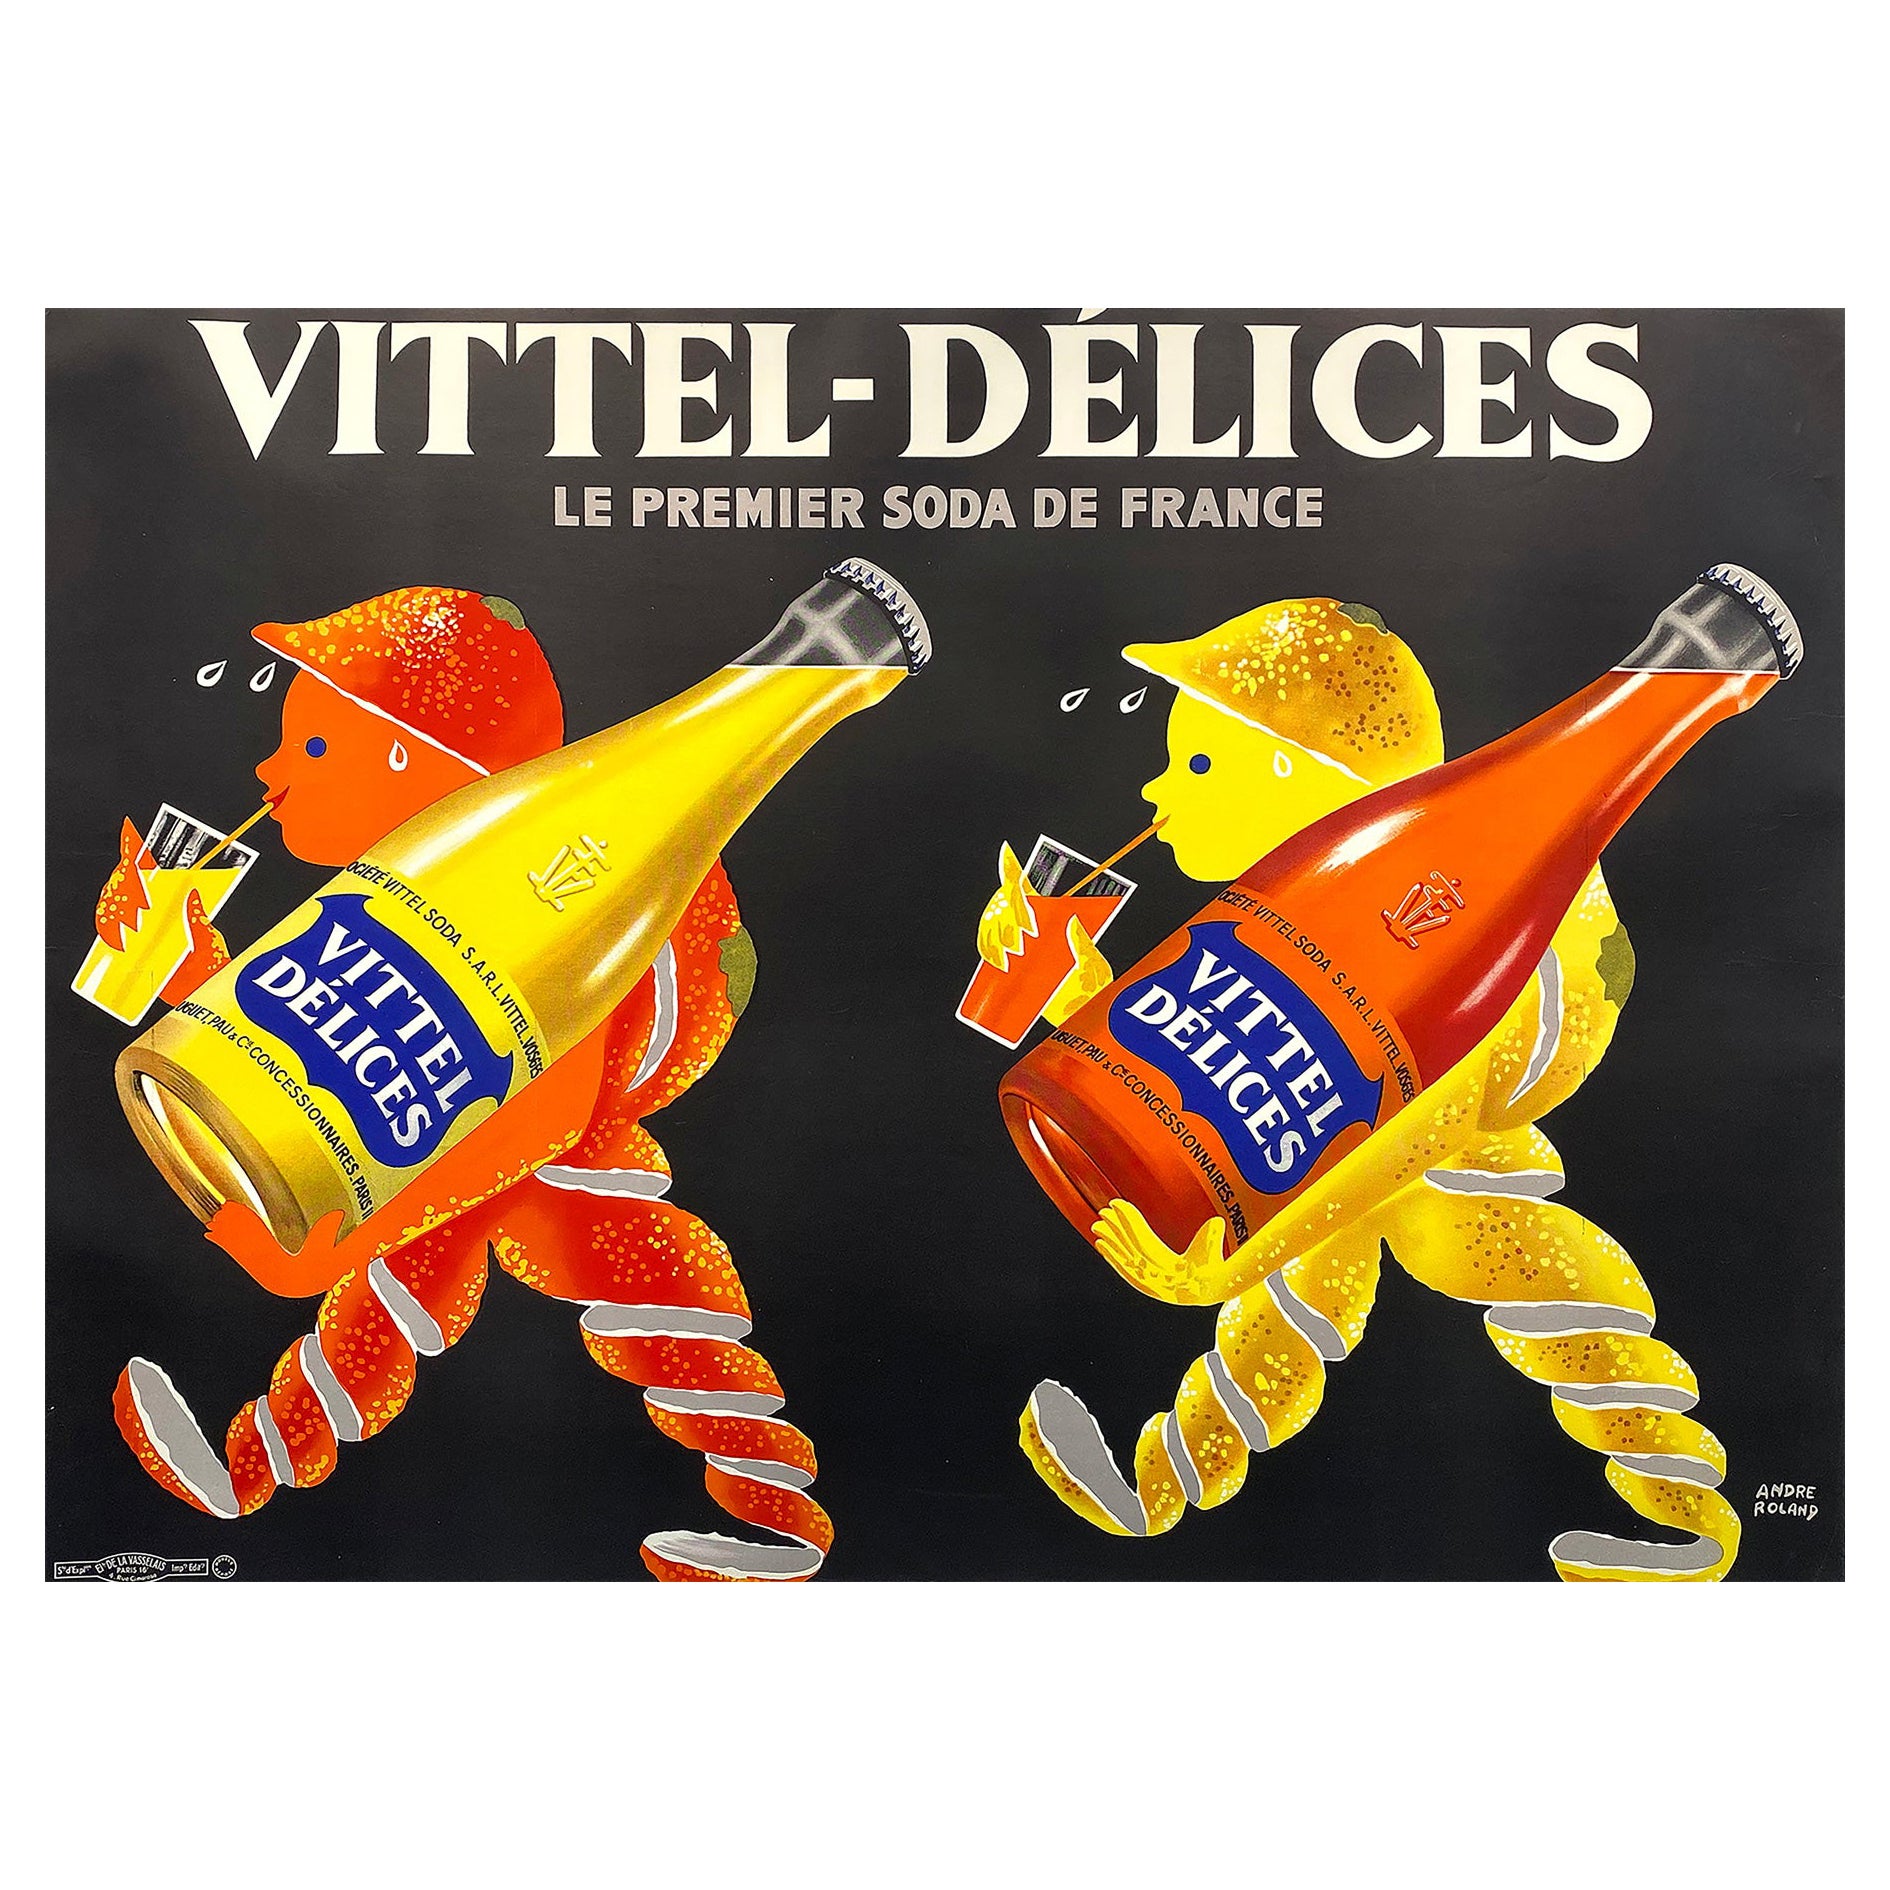 Vittel Delices, C1955 Vintage French Beverage, Drink Advertising Poster, Roland